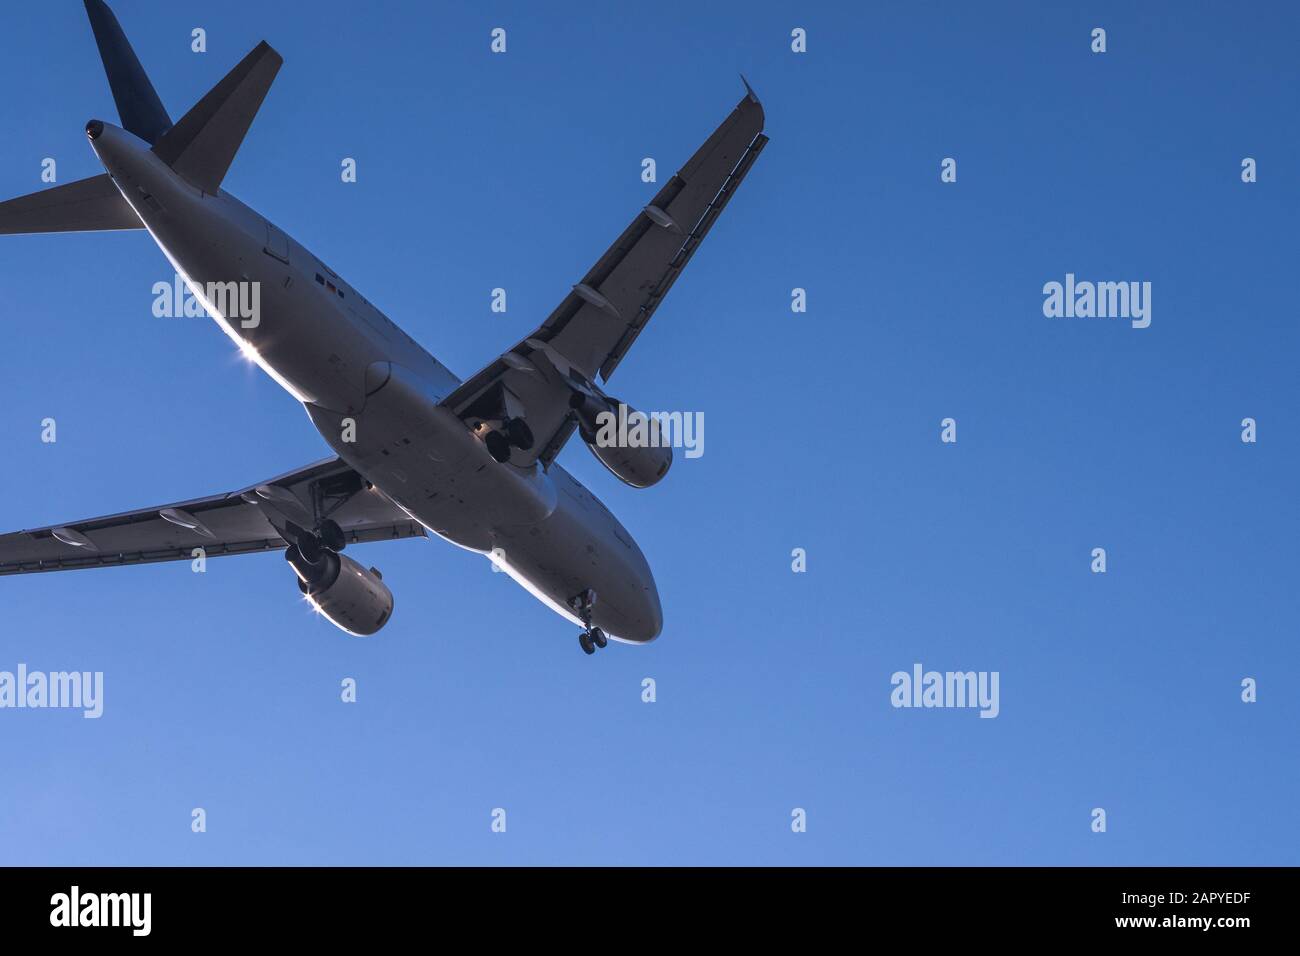 Close view to landing passenger jet Stock Photo